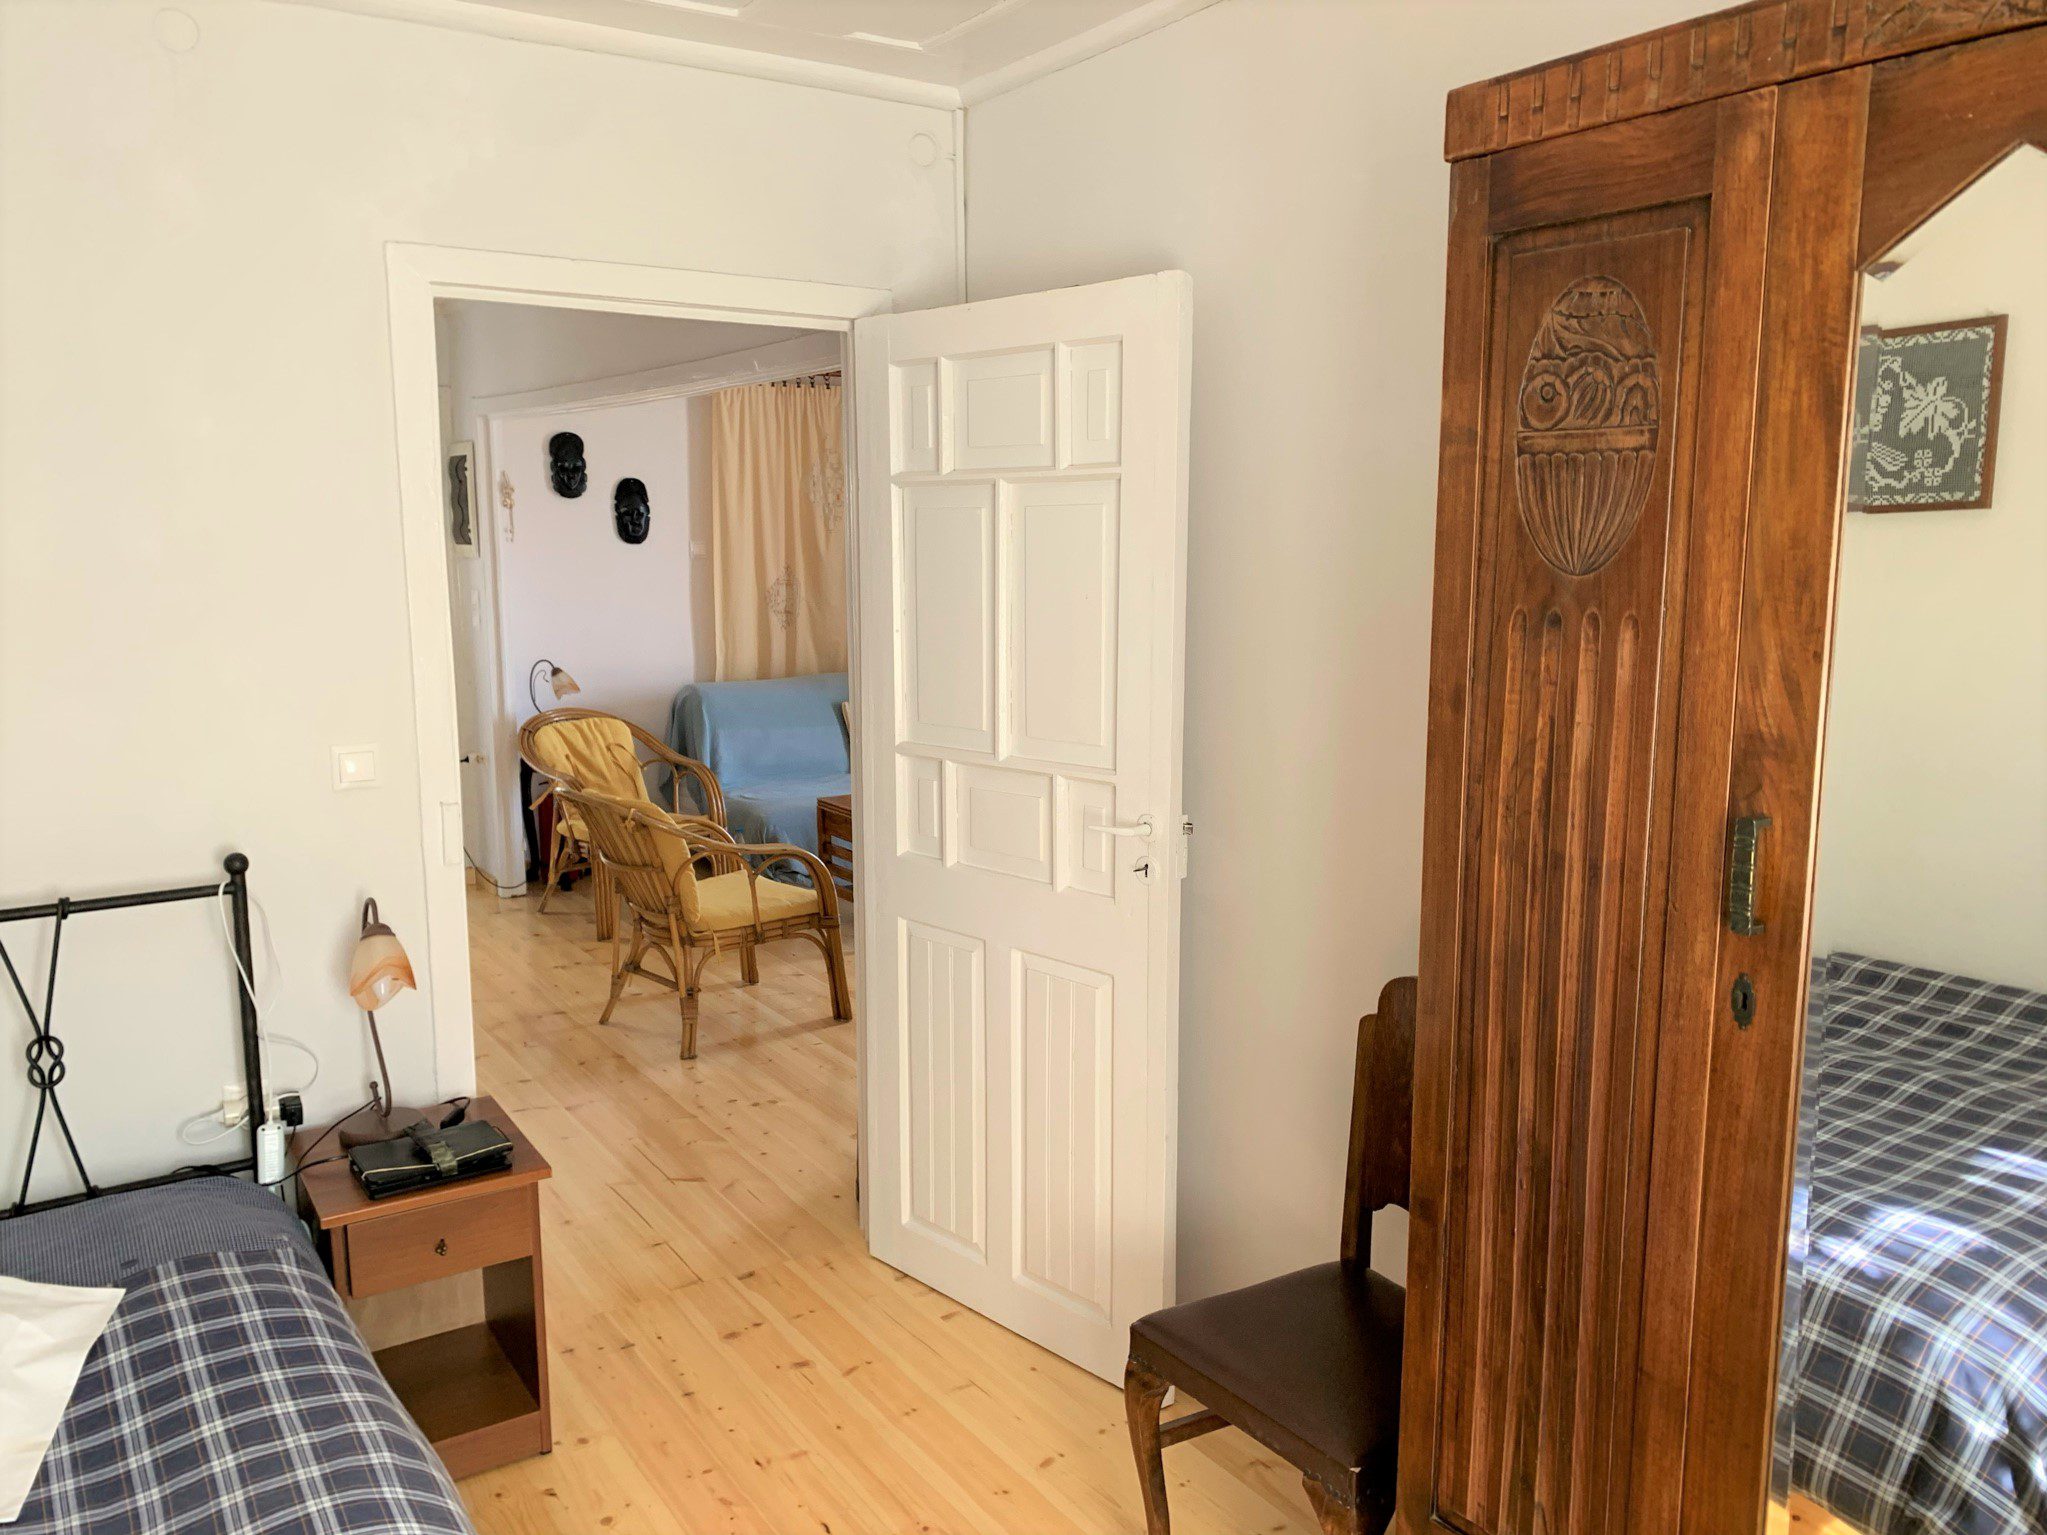 Bedroom of house to rent in Ithaca Greece, Kioni